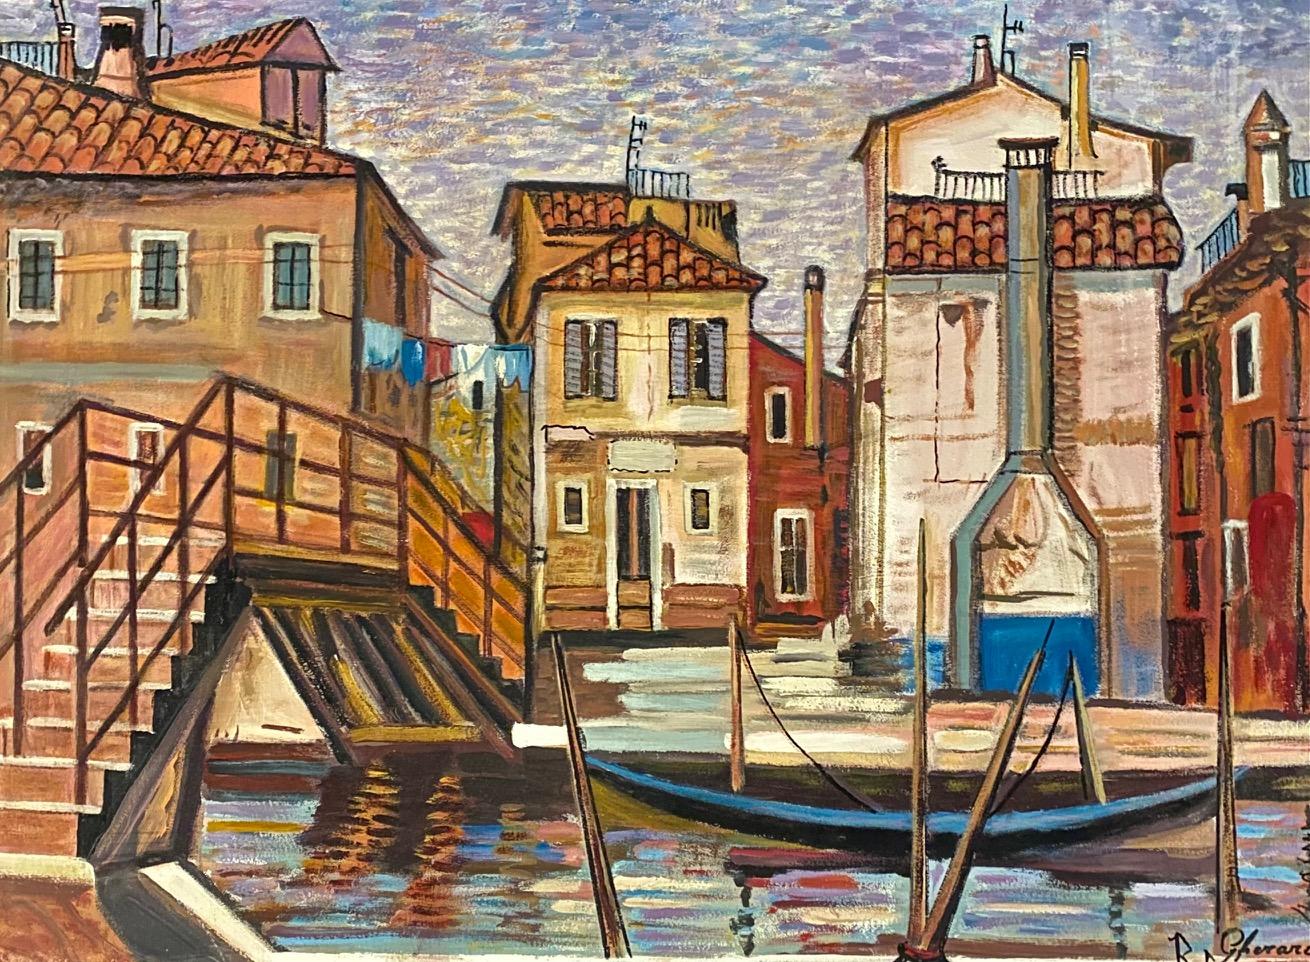 Venise, les Gondoles by Roberto Gherardi - Oil on canvas 51x68 cm